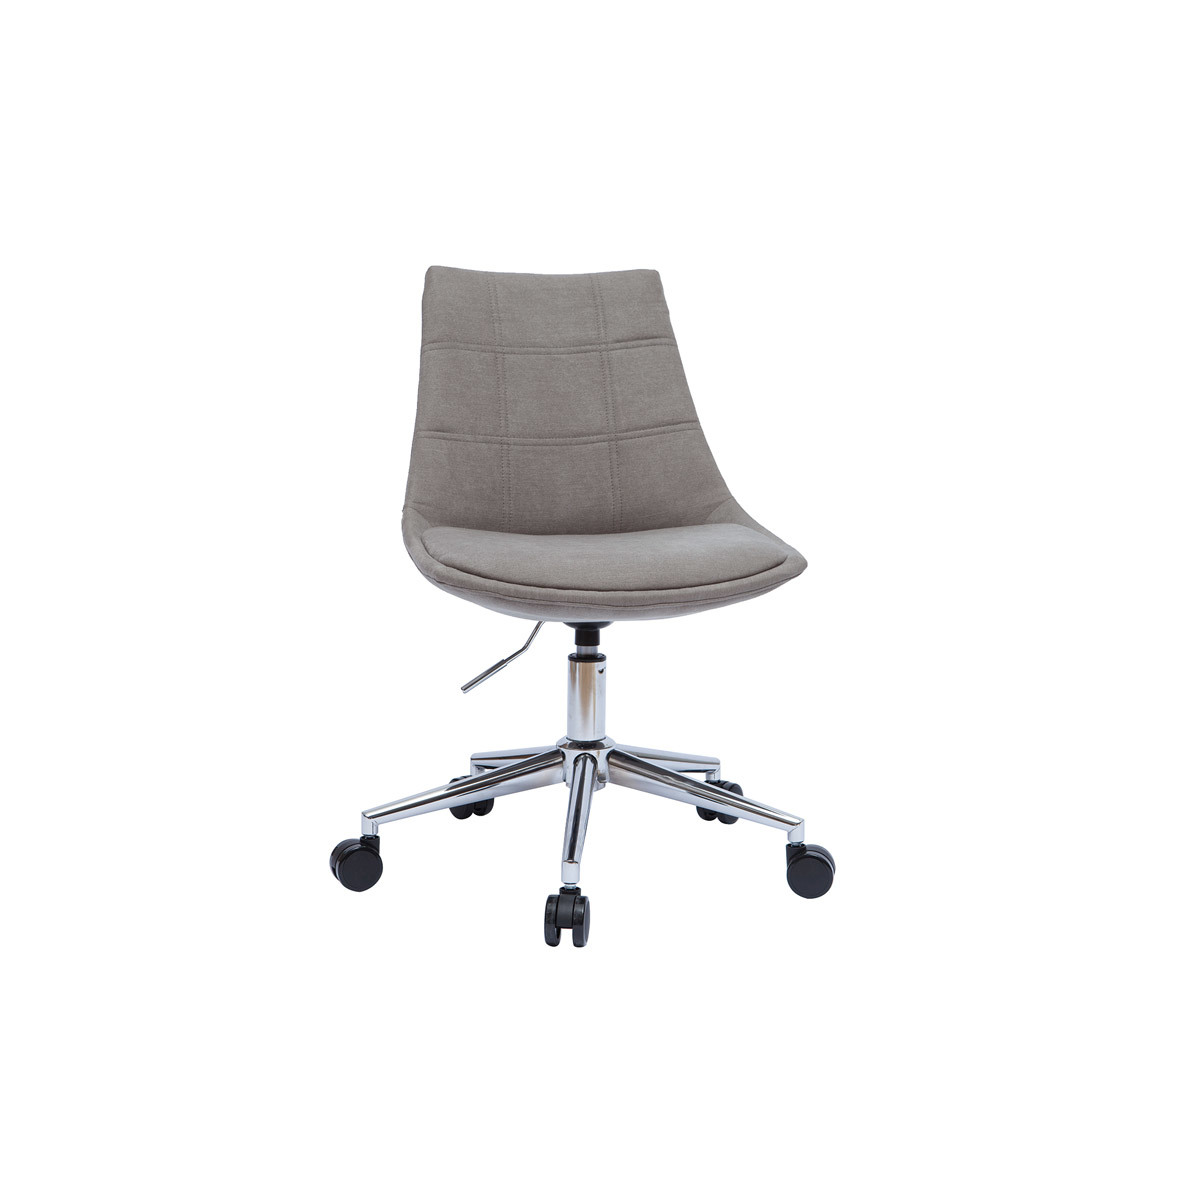 Chaise de bureau design tissu gris clair MATILDE vue1